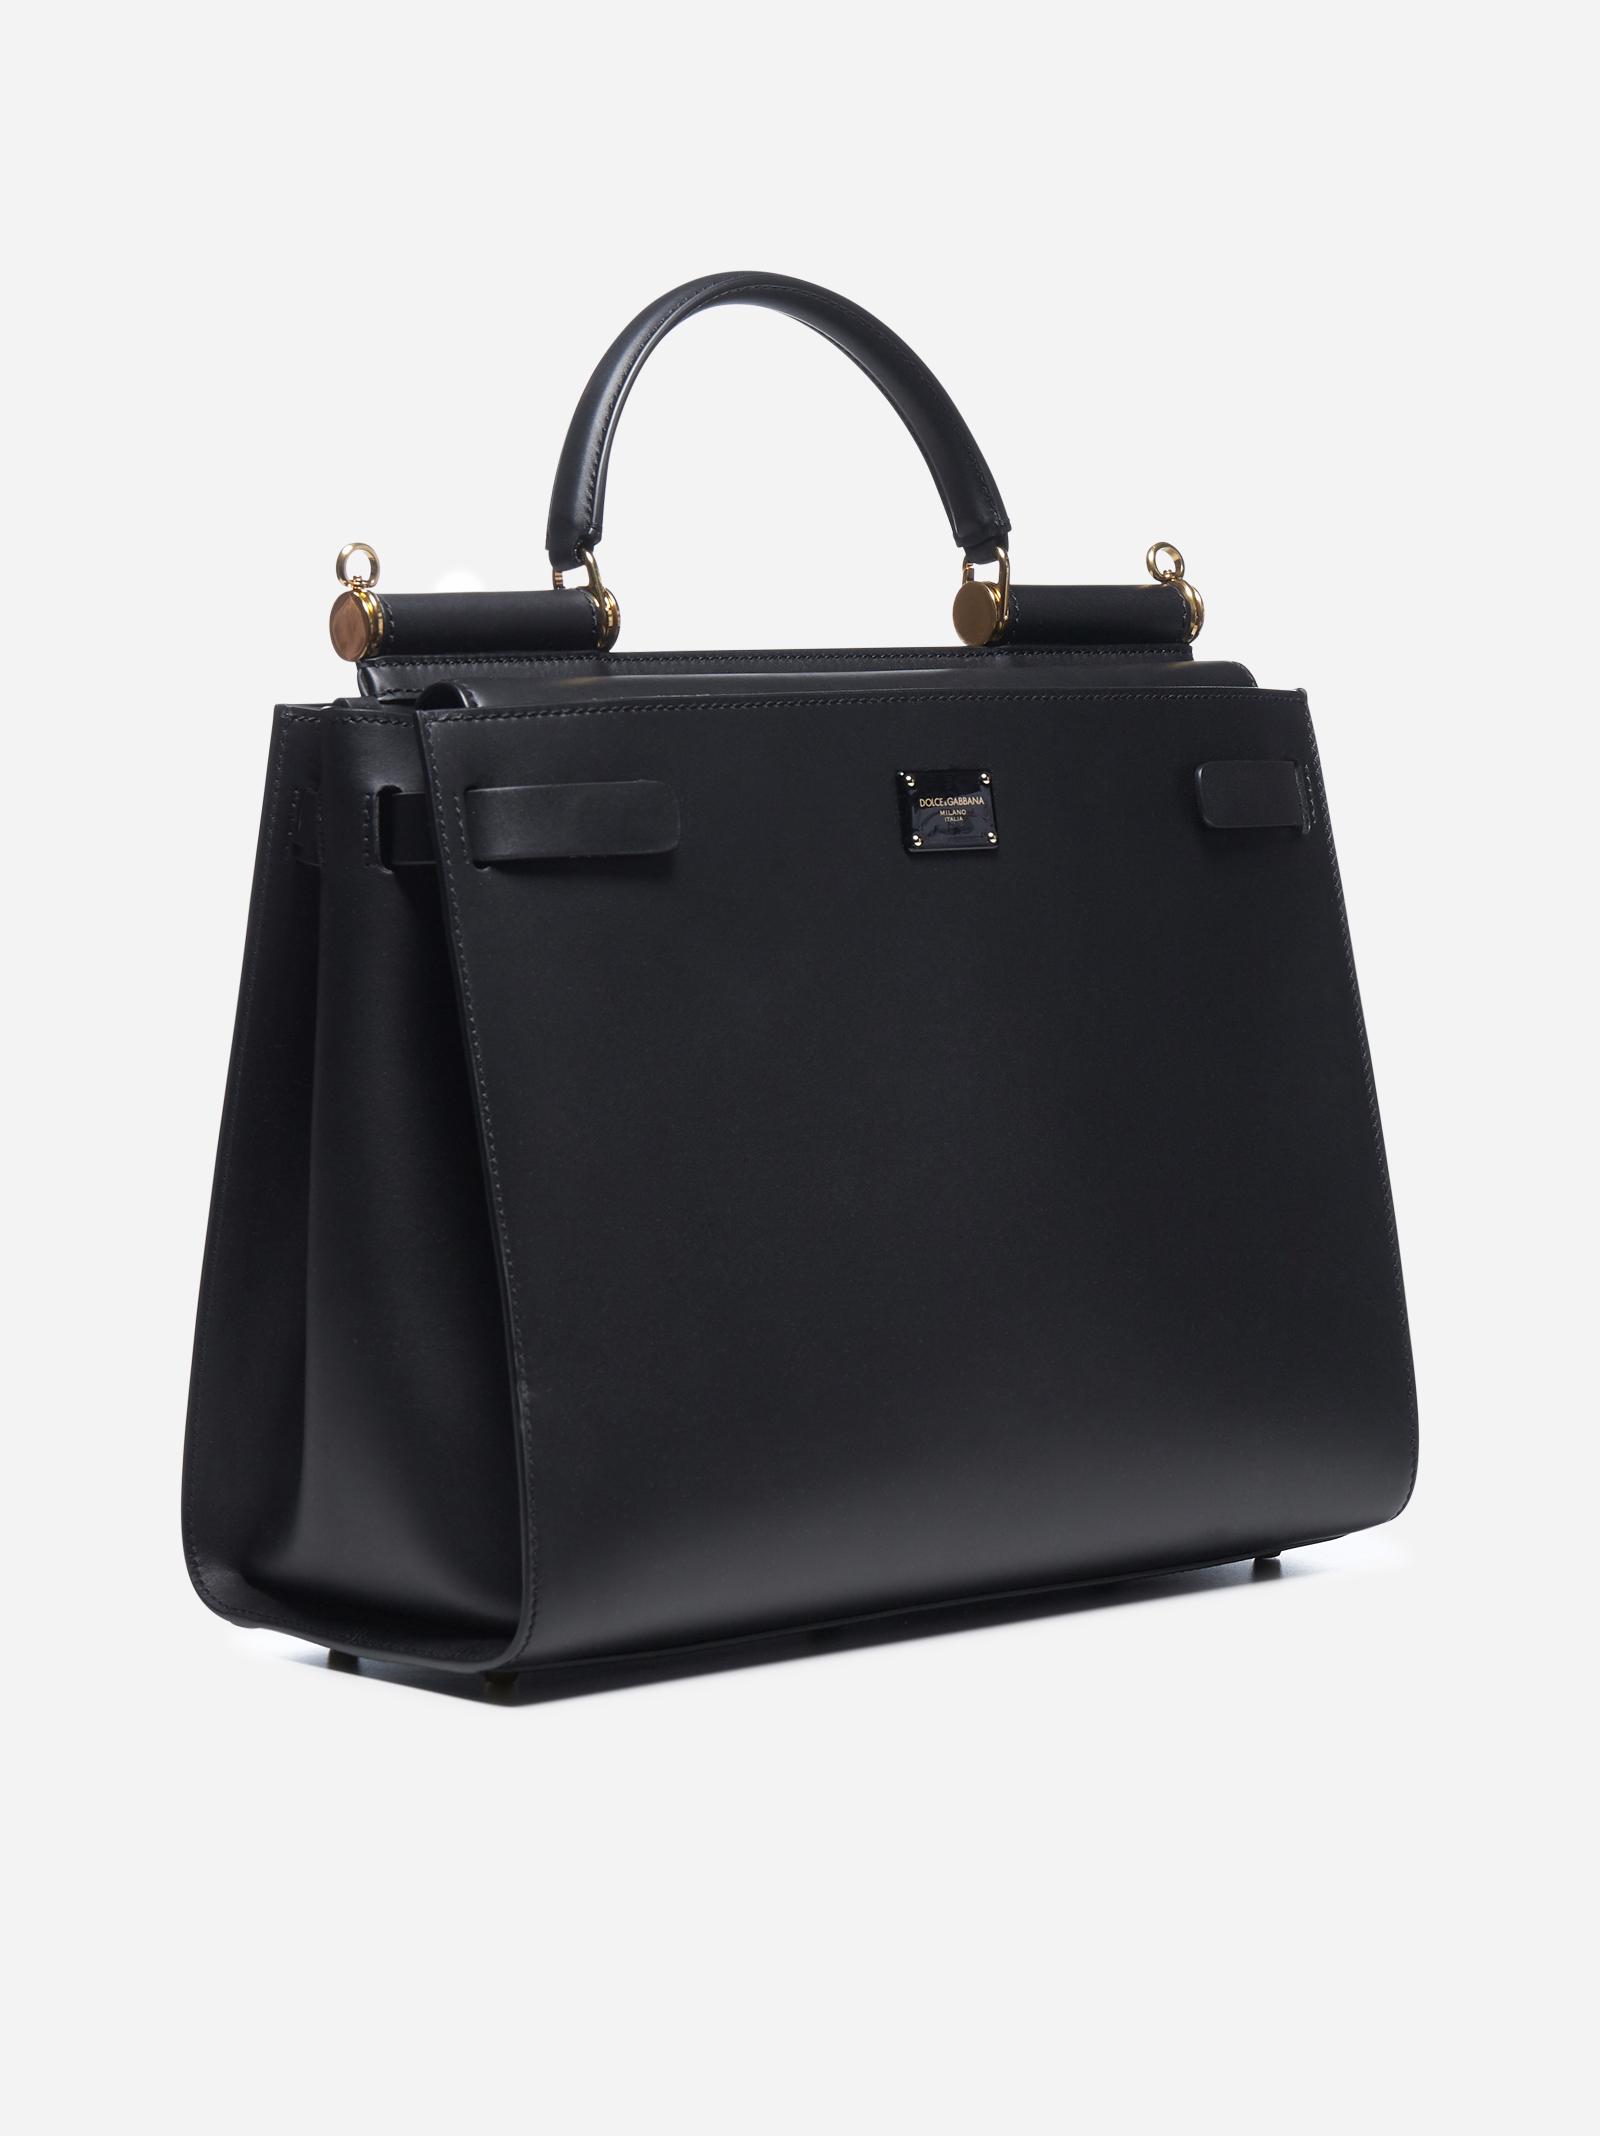 Dolce & Gabbana Medium Calfskin Sicily 62 Bag in Black | Lyst